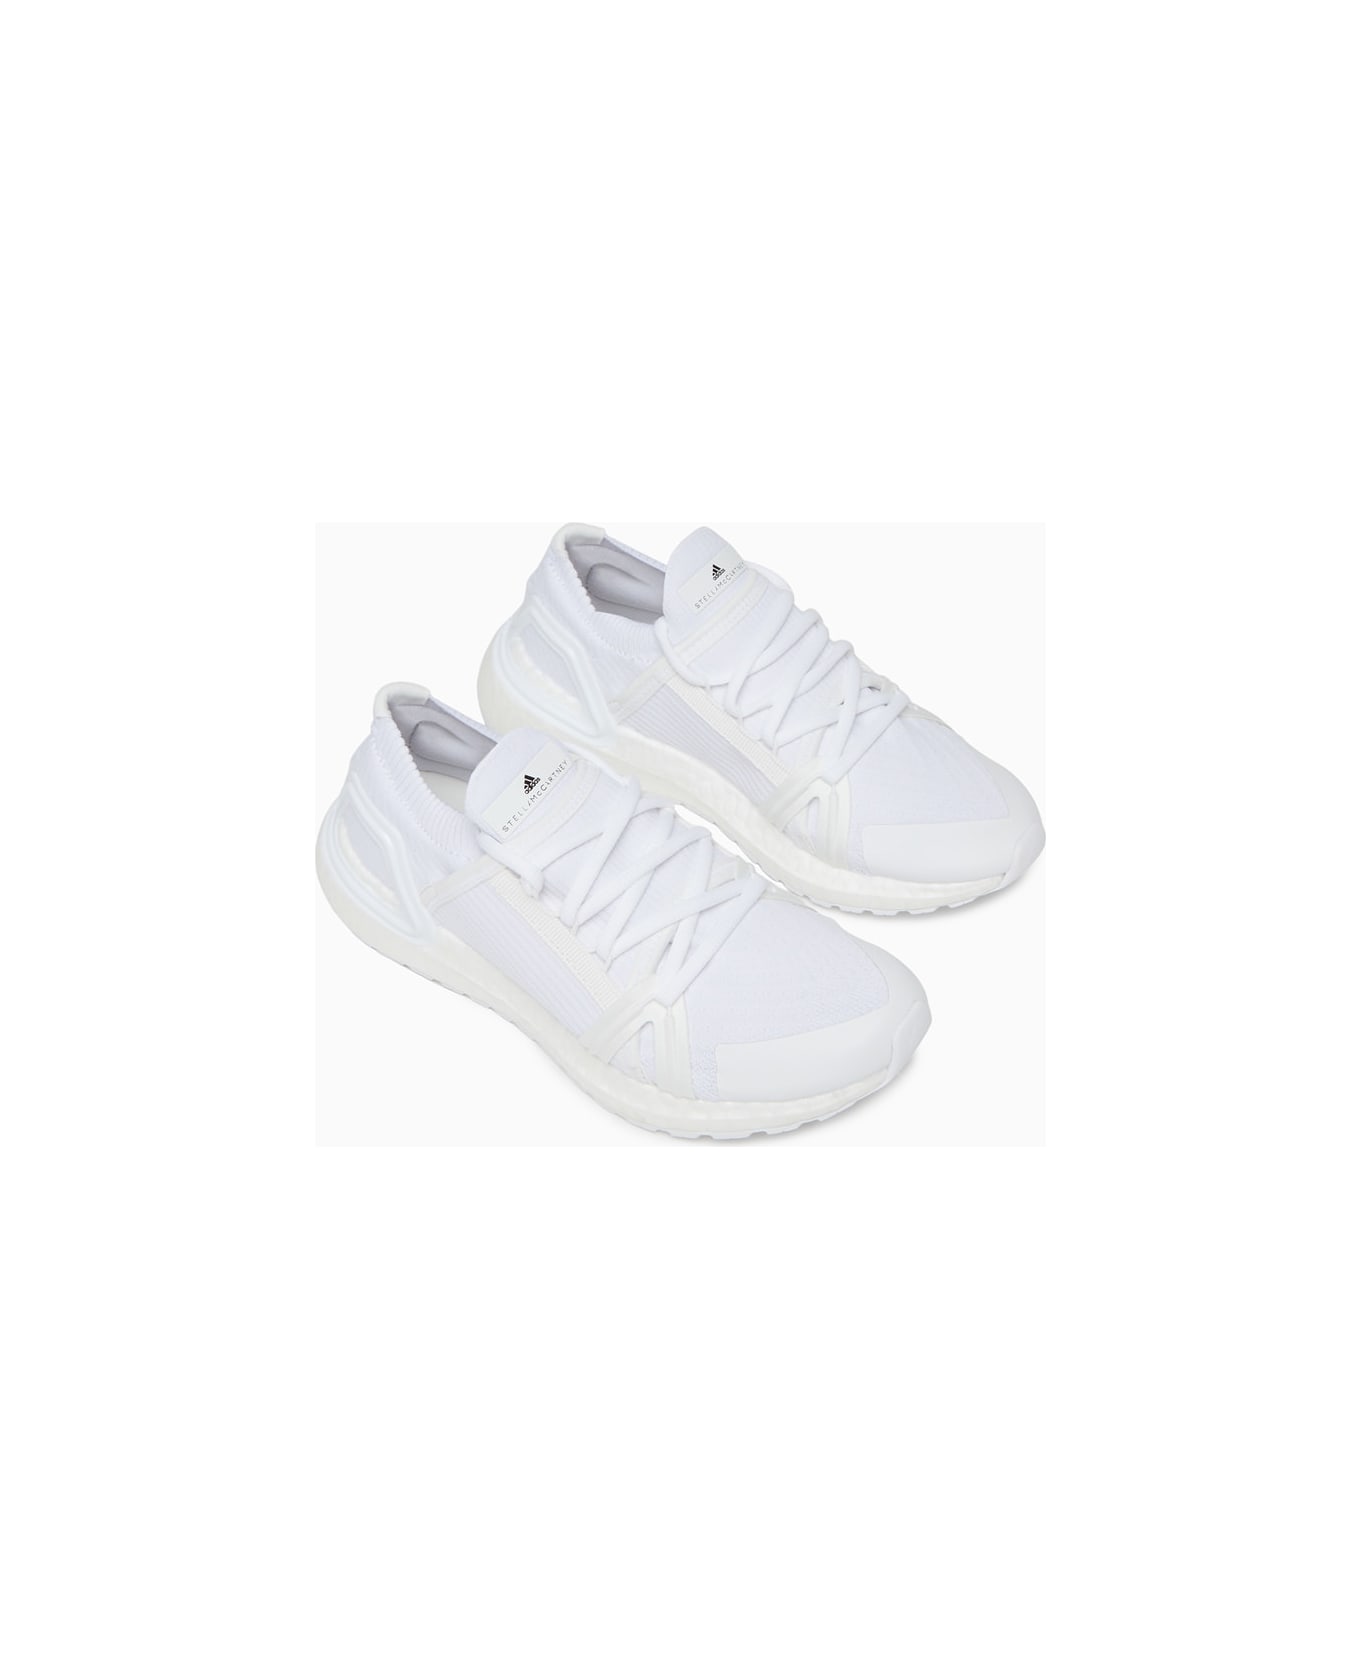 Adidas by Stella McCartney Asmc Ultraboost 20 Sneakers Hp6701 - White スニーカー